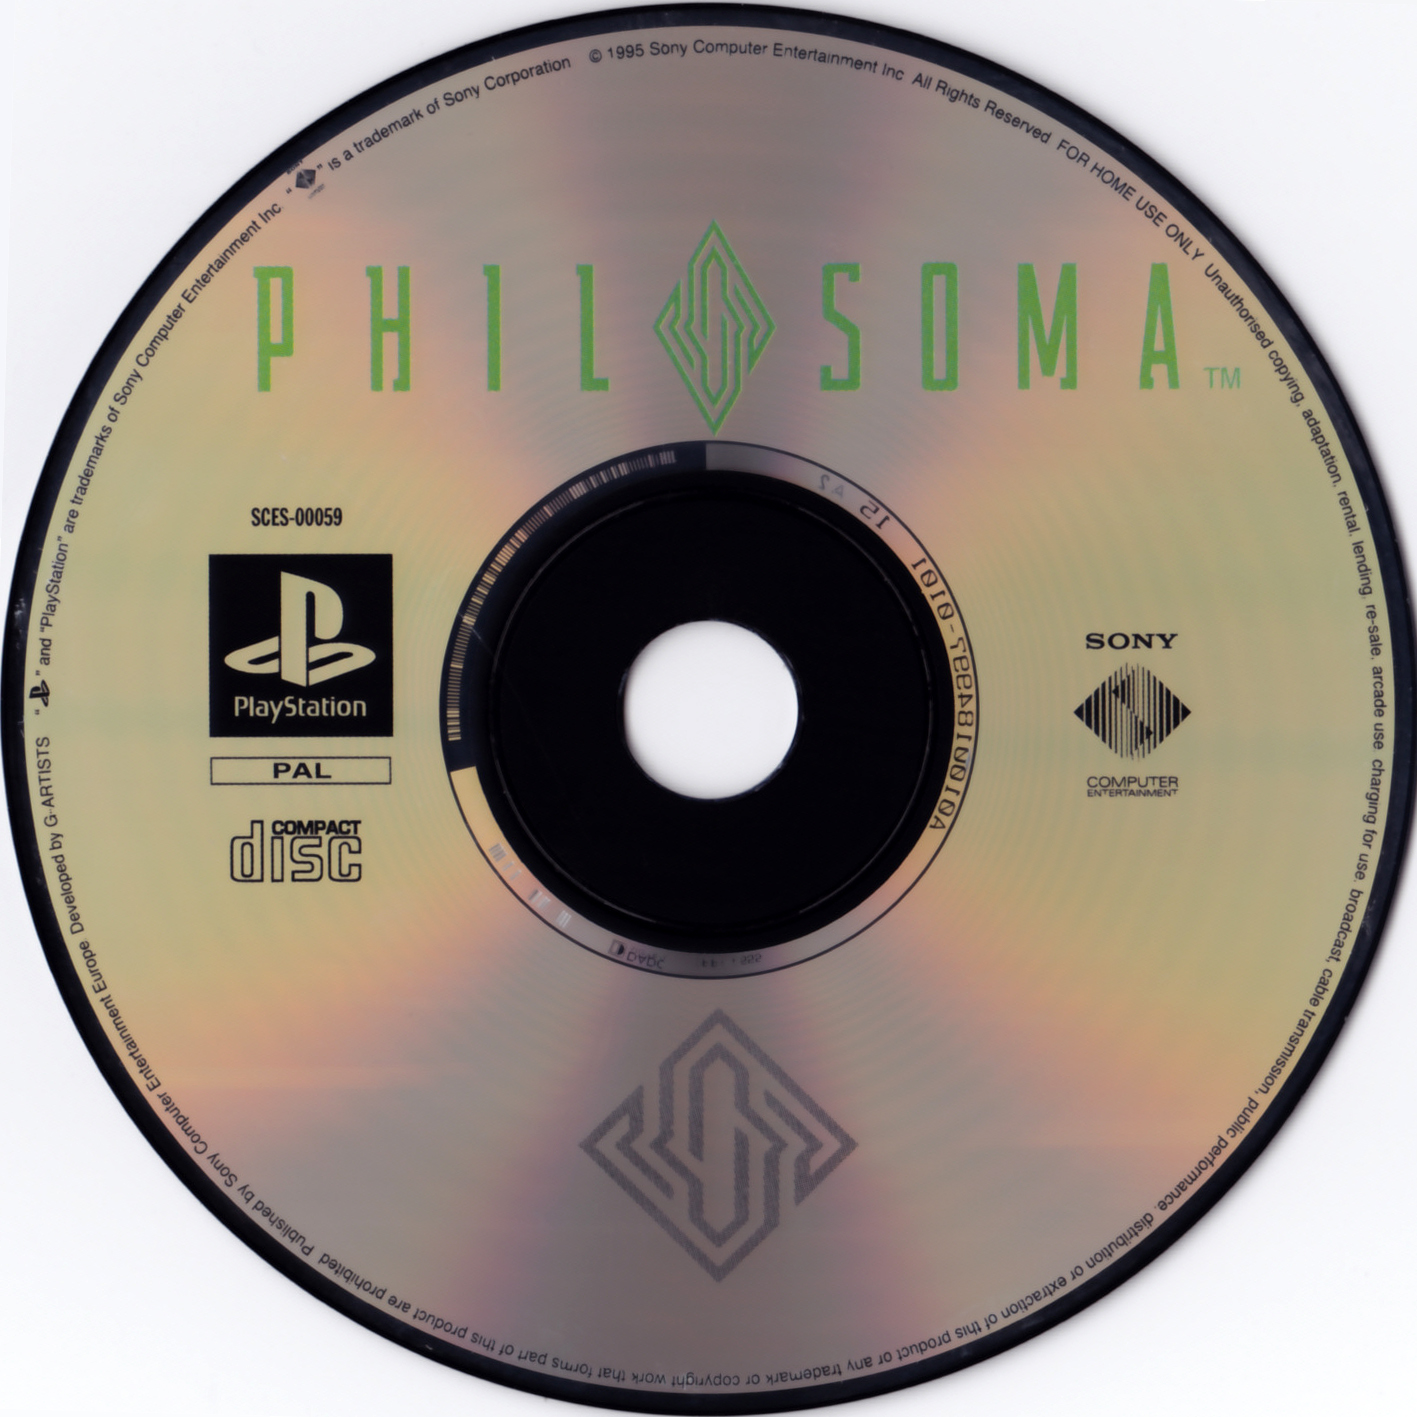 download philosoma ps1